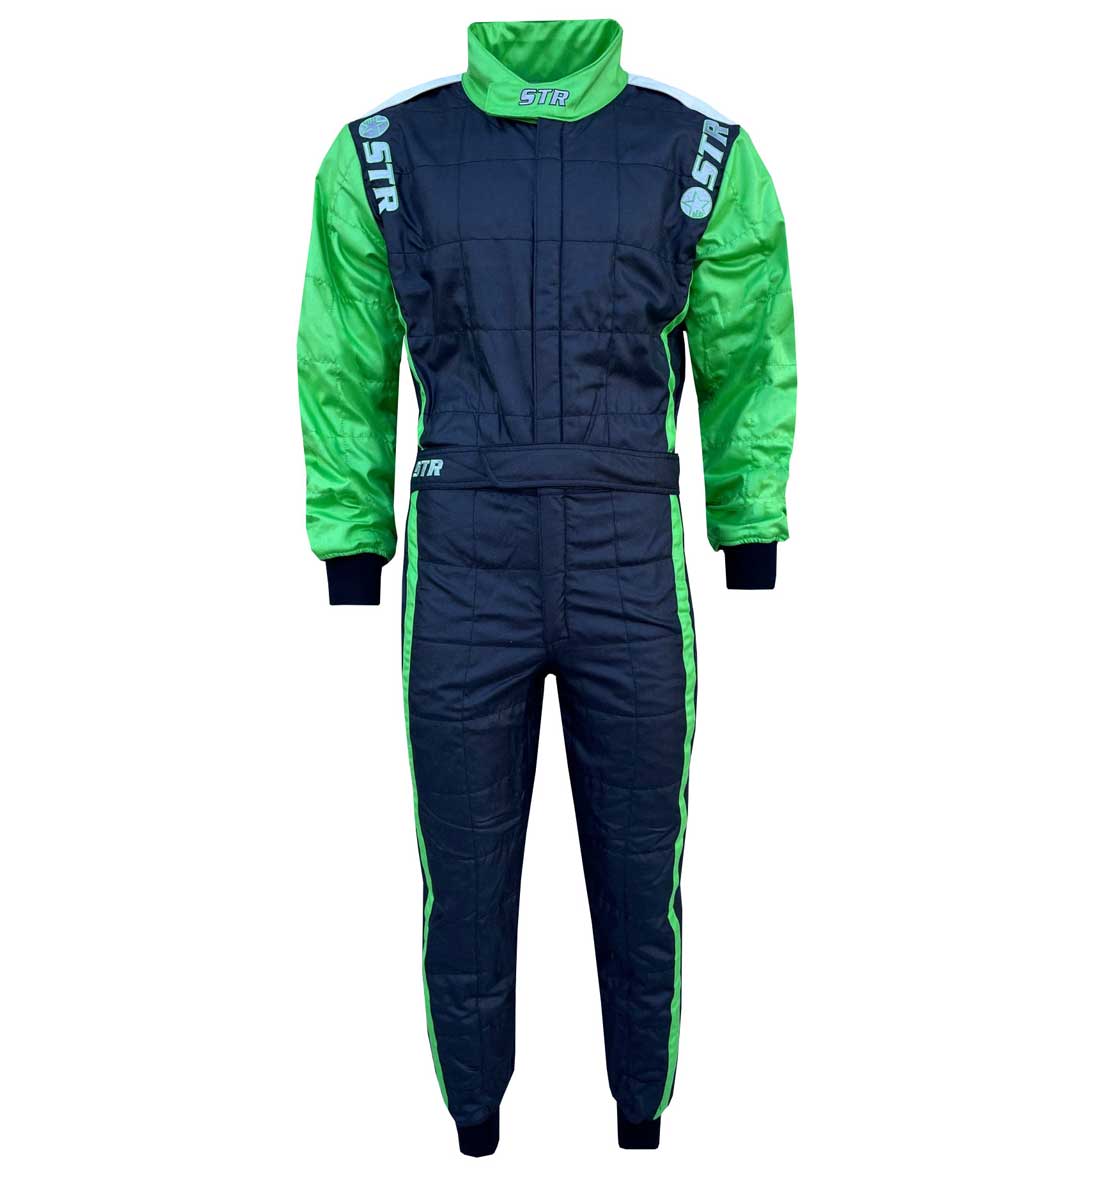 STR 'Club' Race Suit - Black/Green